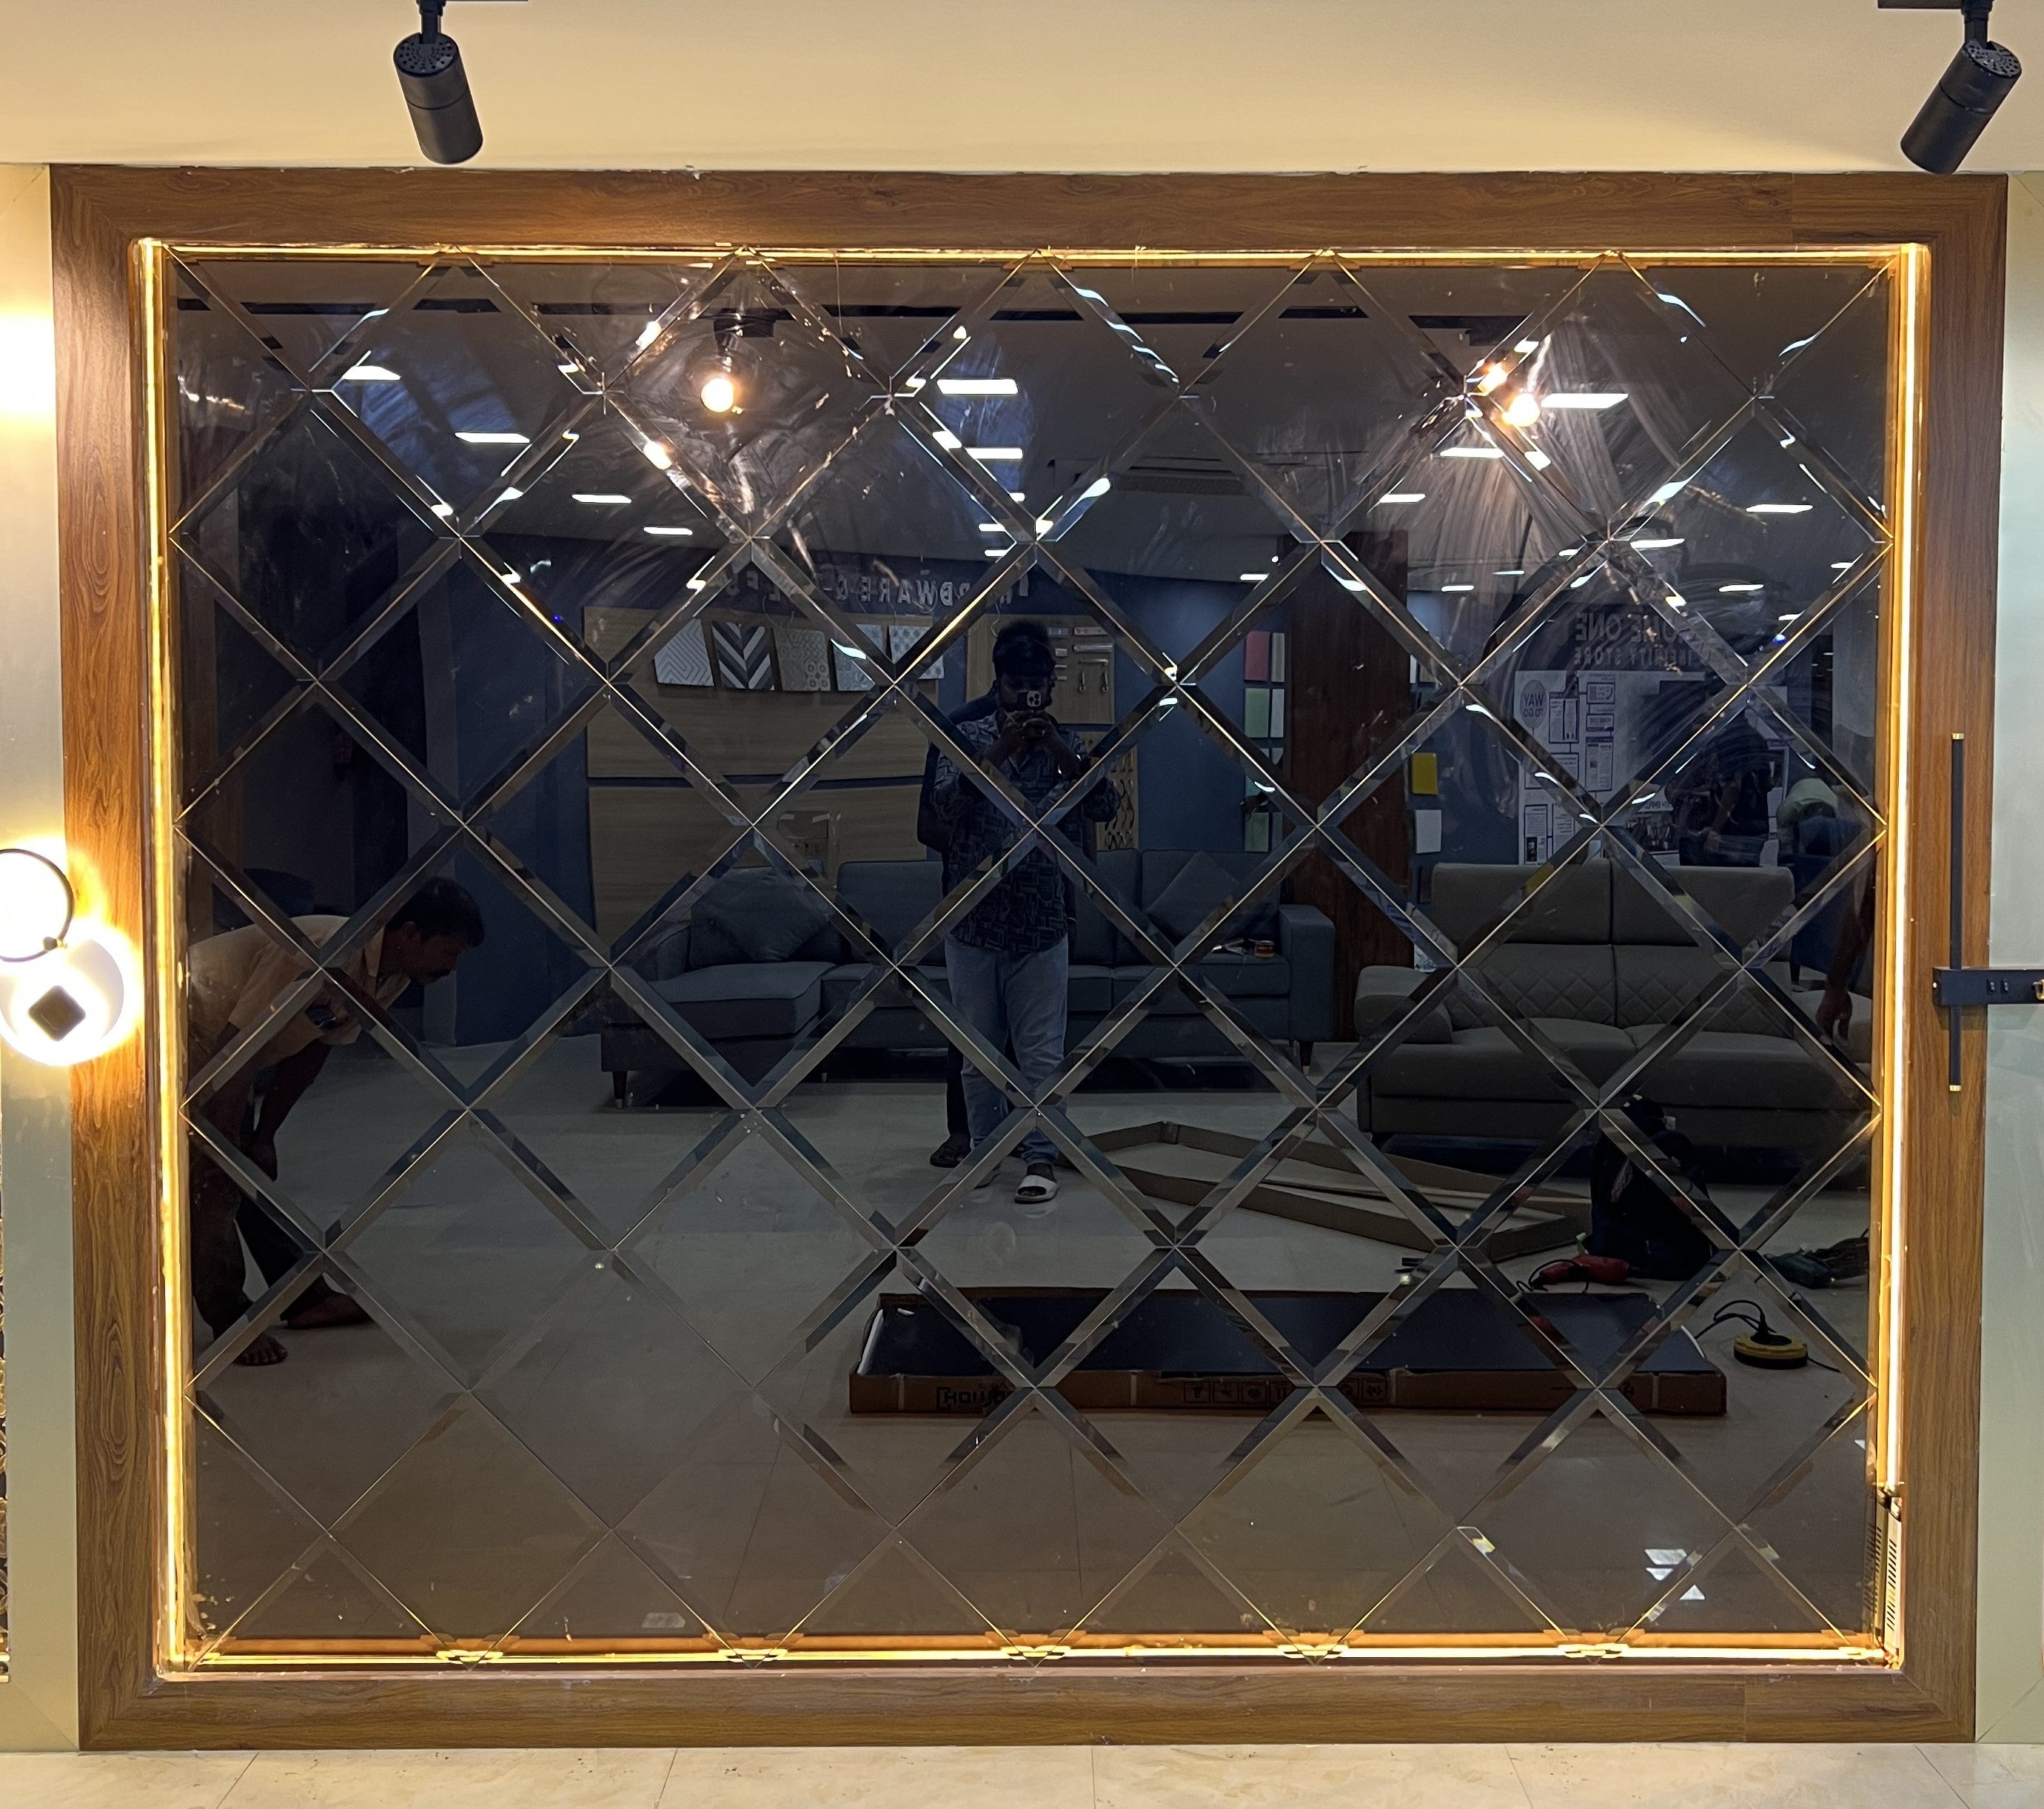 Exquisite Foyer Design Featuring a Beveled Bronze Mirror